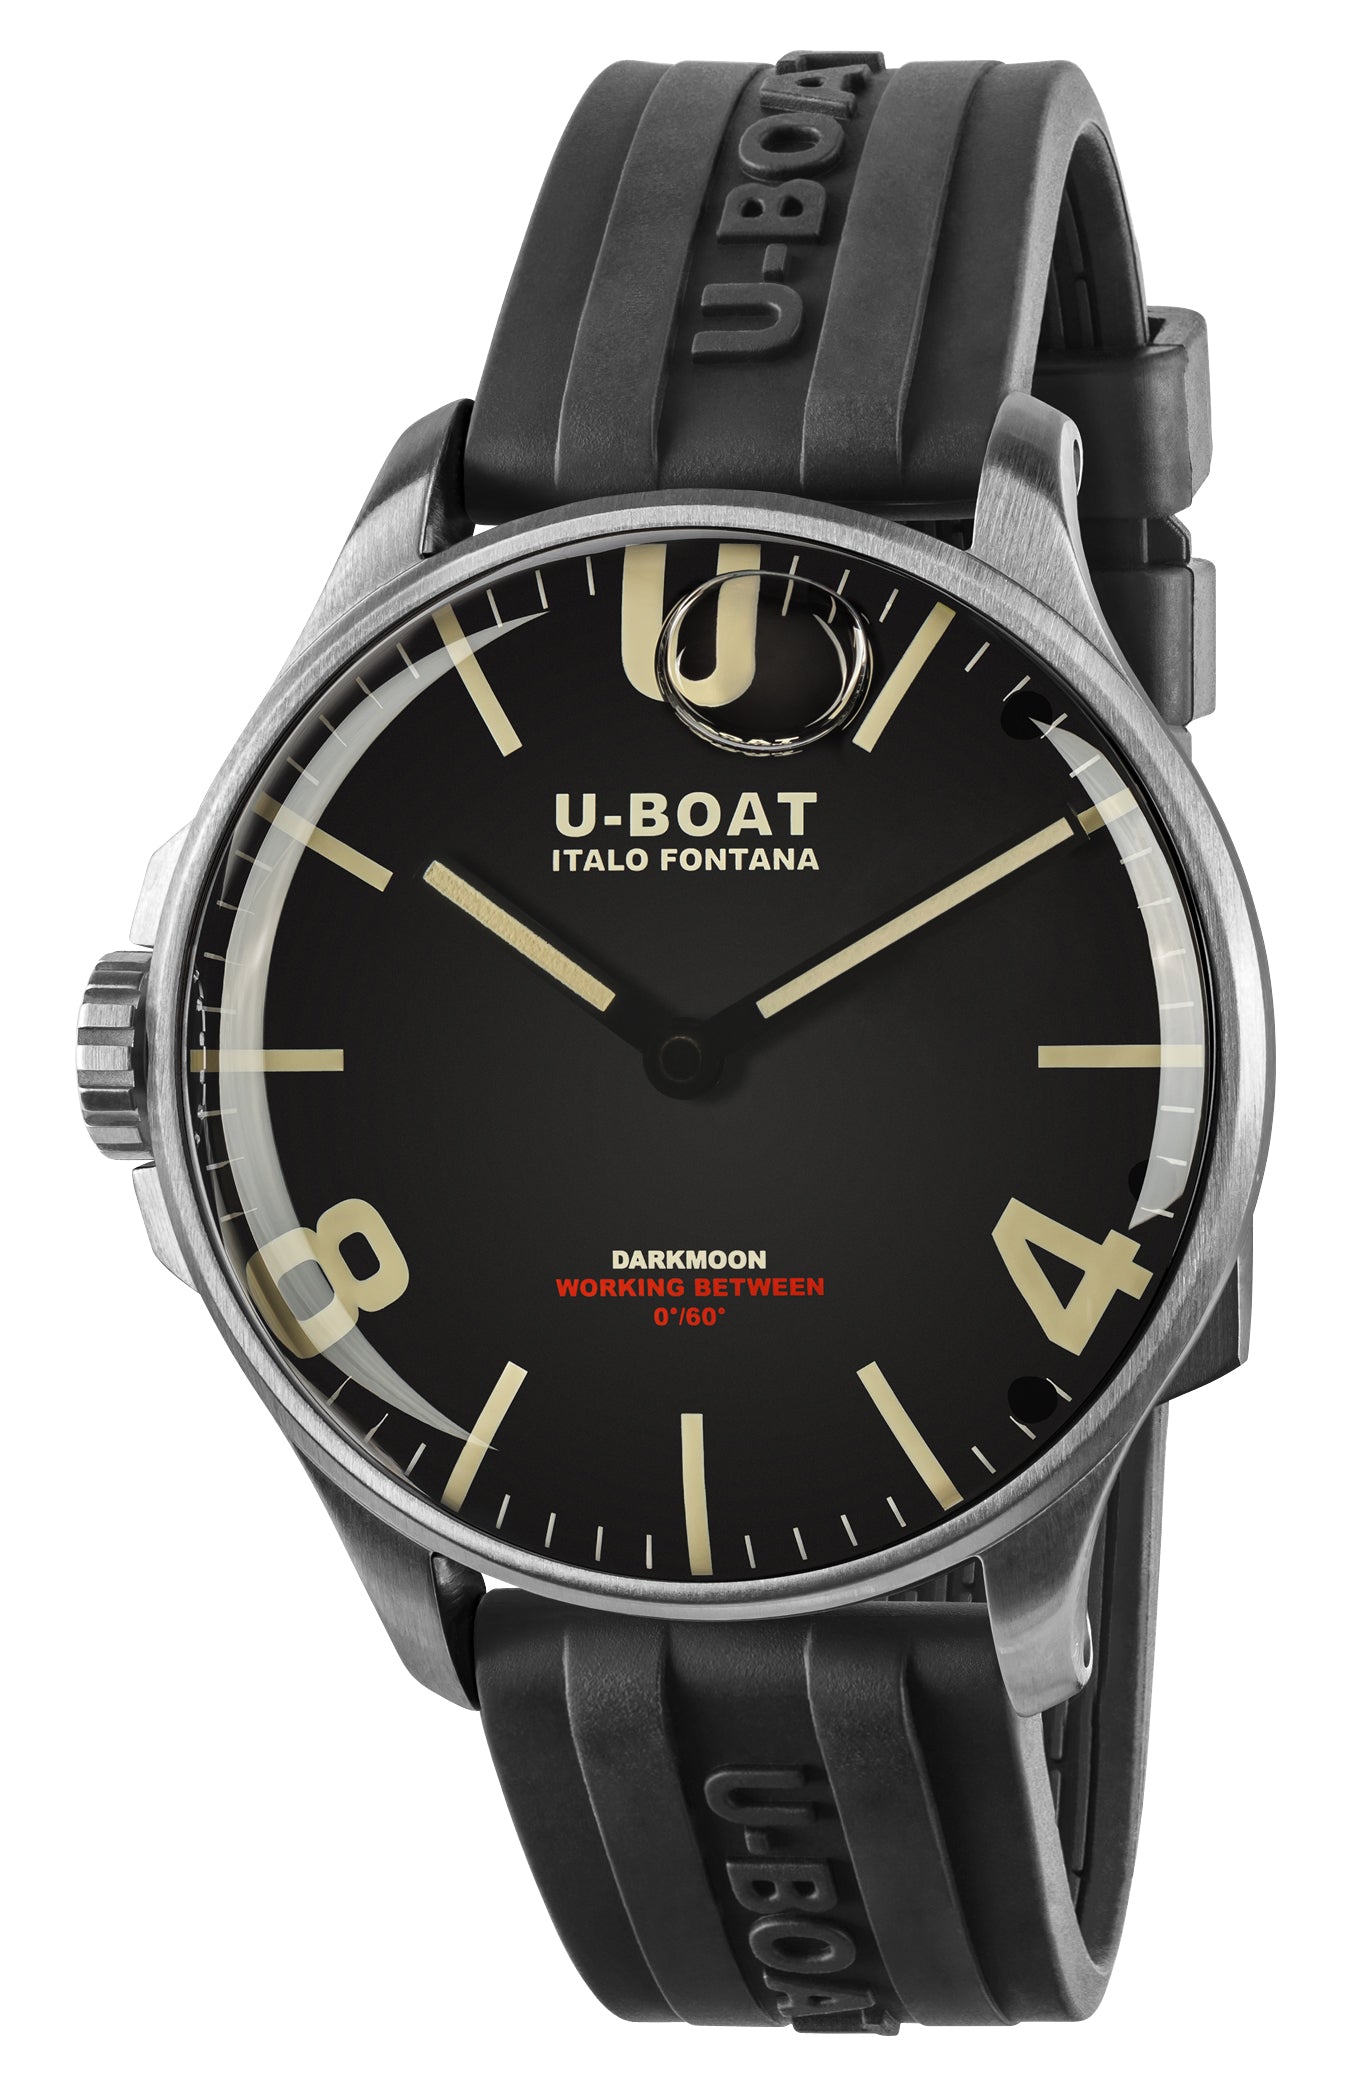 update alt-text with template Watches - Mens-U-Boat-8463-40 - 45 mm, black, Darkmoon, mens, menswatches, new arrivals, round, rpSKU_8464, rpSKU_8465, rpSKU_8466, rpSKU_8467, rpSKU_8700, rubber, stainless steel case, swiss quartz, U-Boat, watches-Watches & Beyond